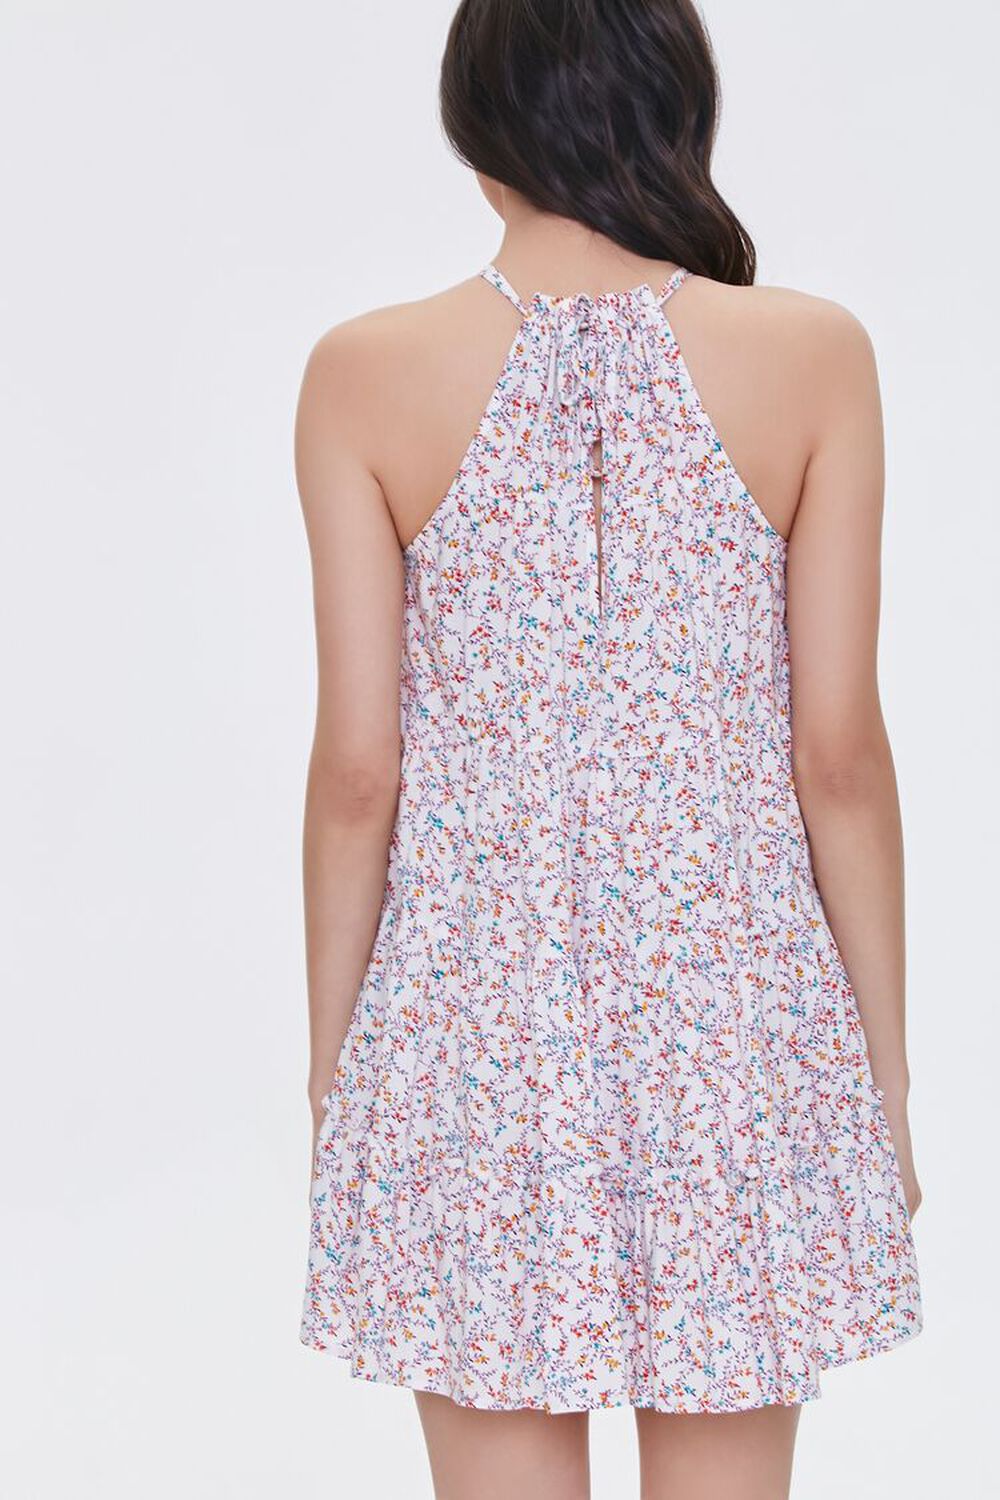 CREAM/PURPLE Floral Print Mini Dress, image 3